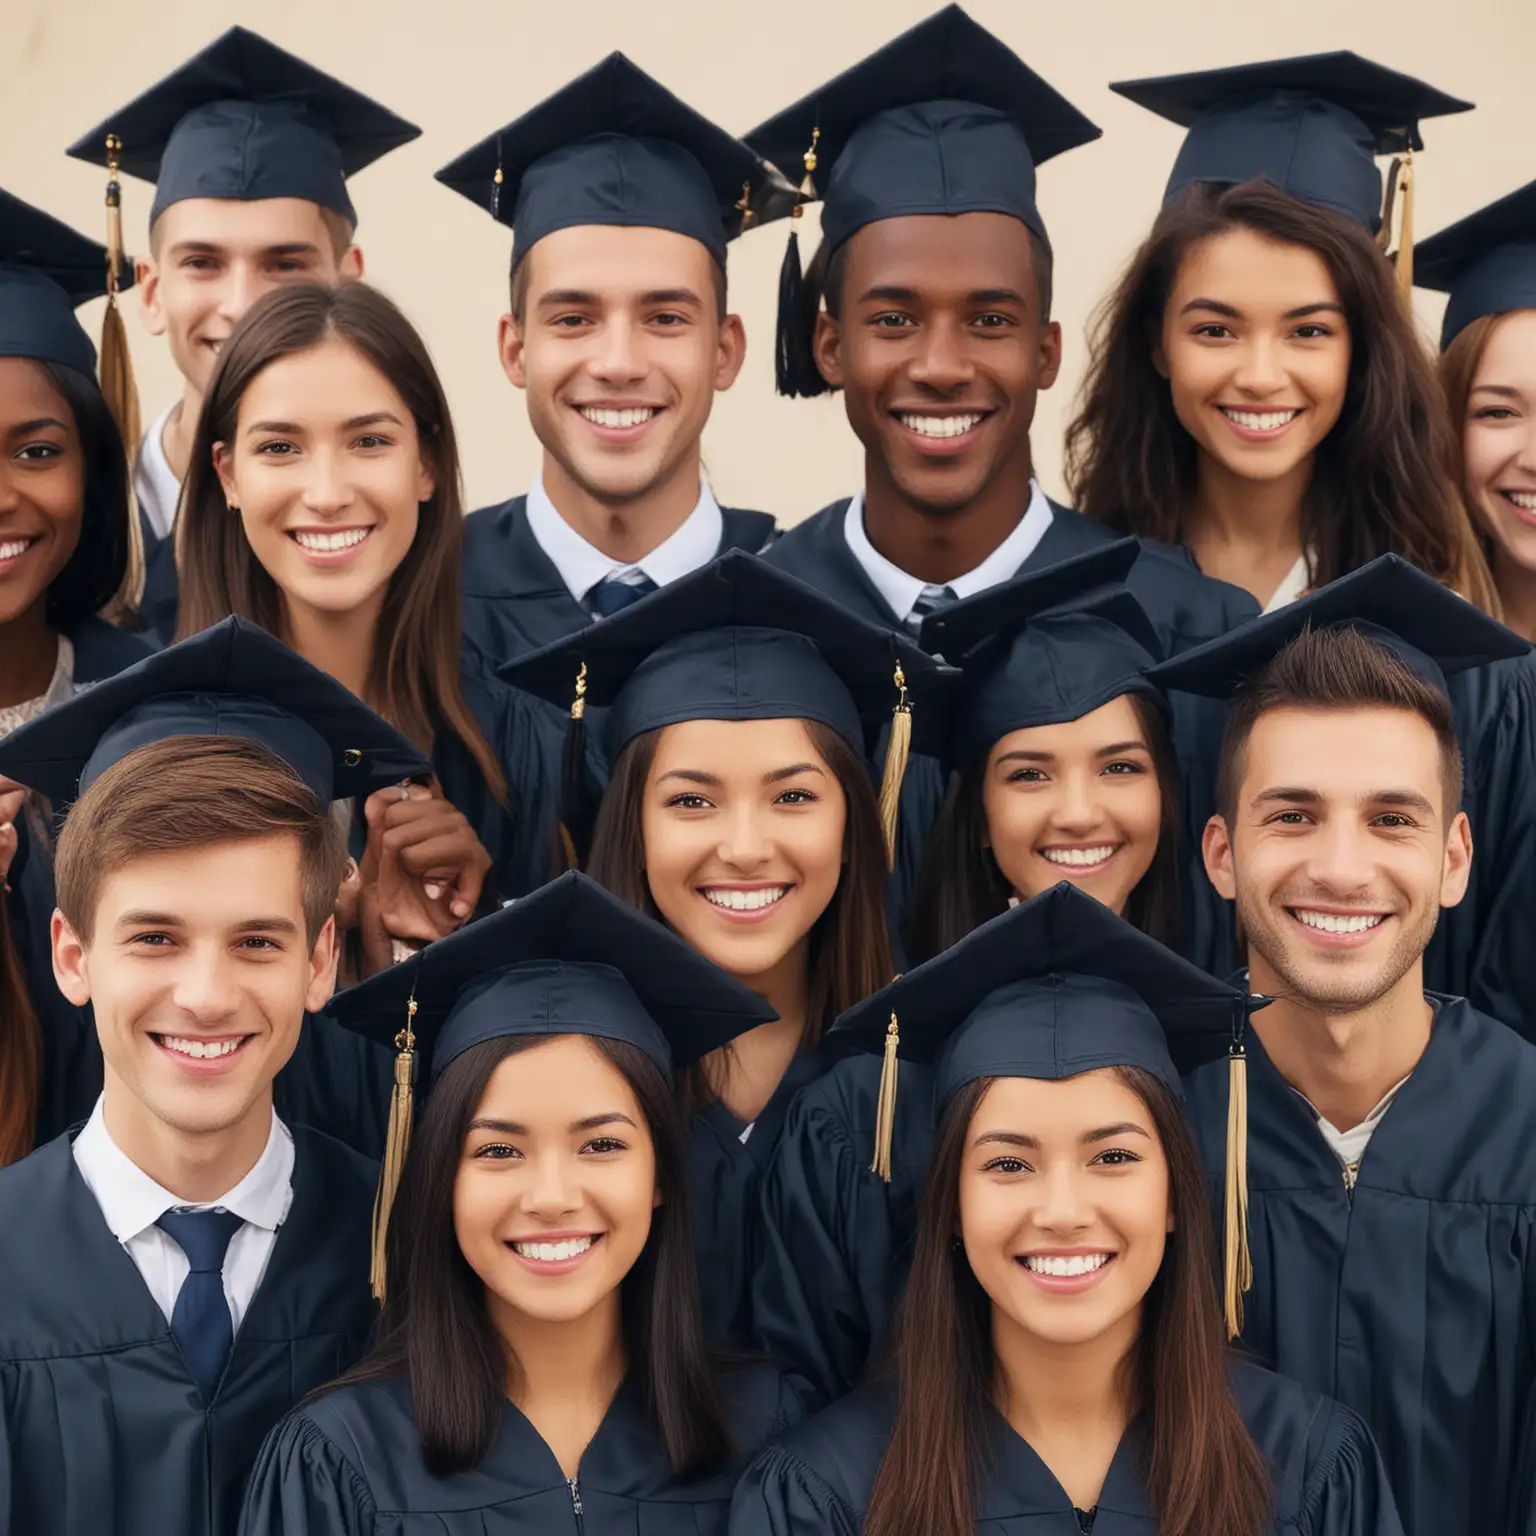 Diverse Graduates Celebrating Success with Joyful Smiles